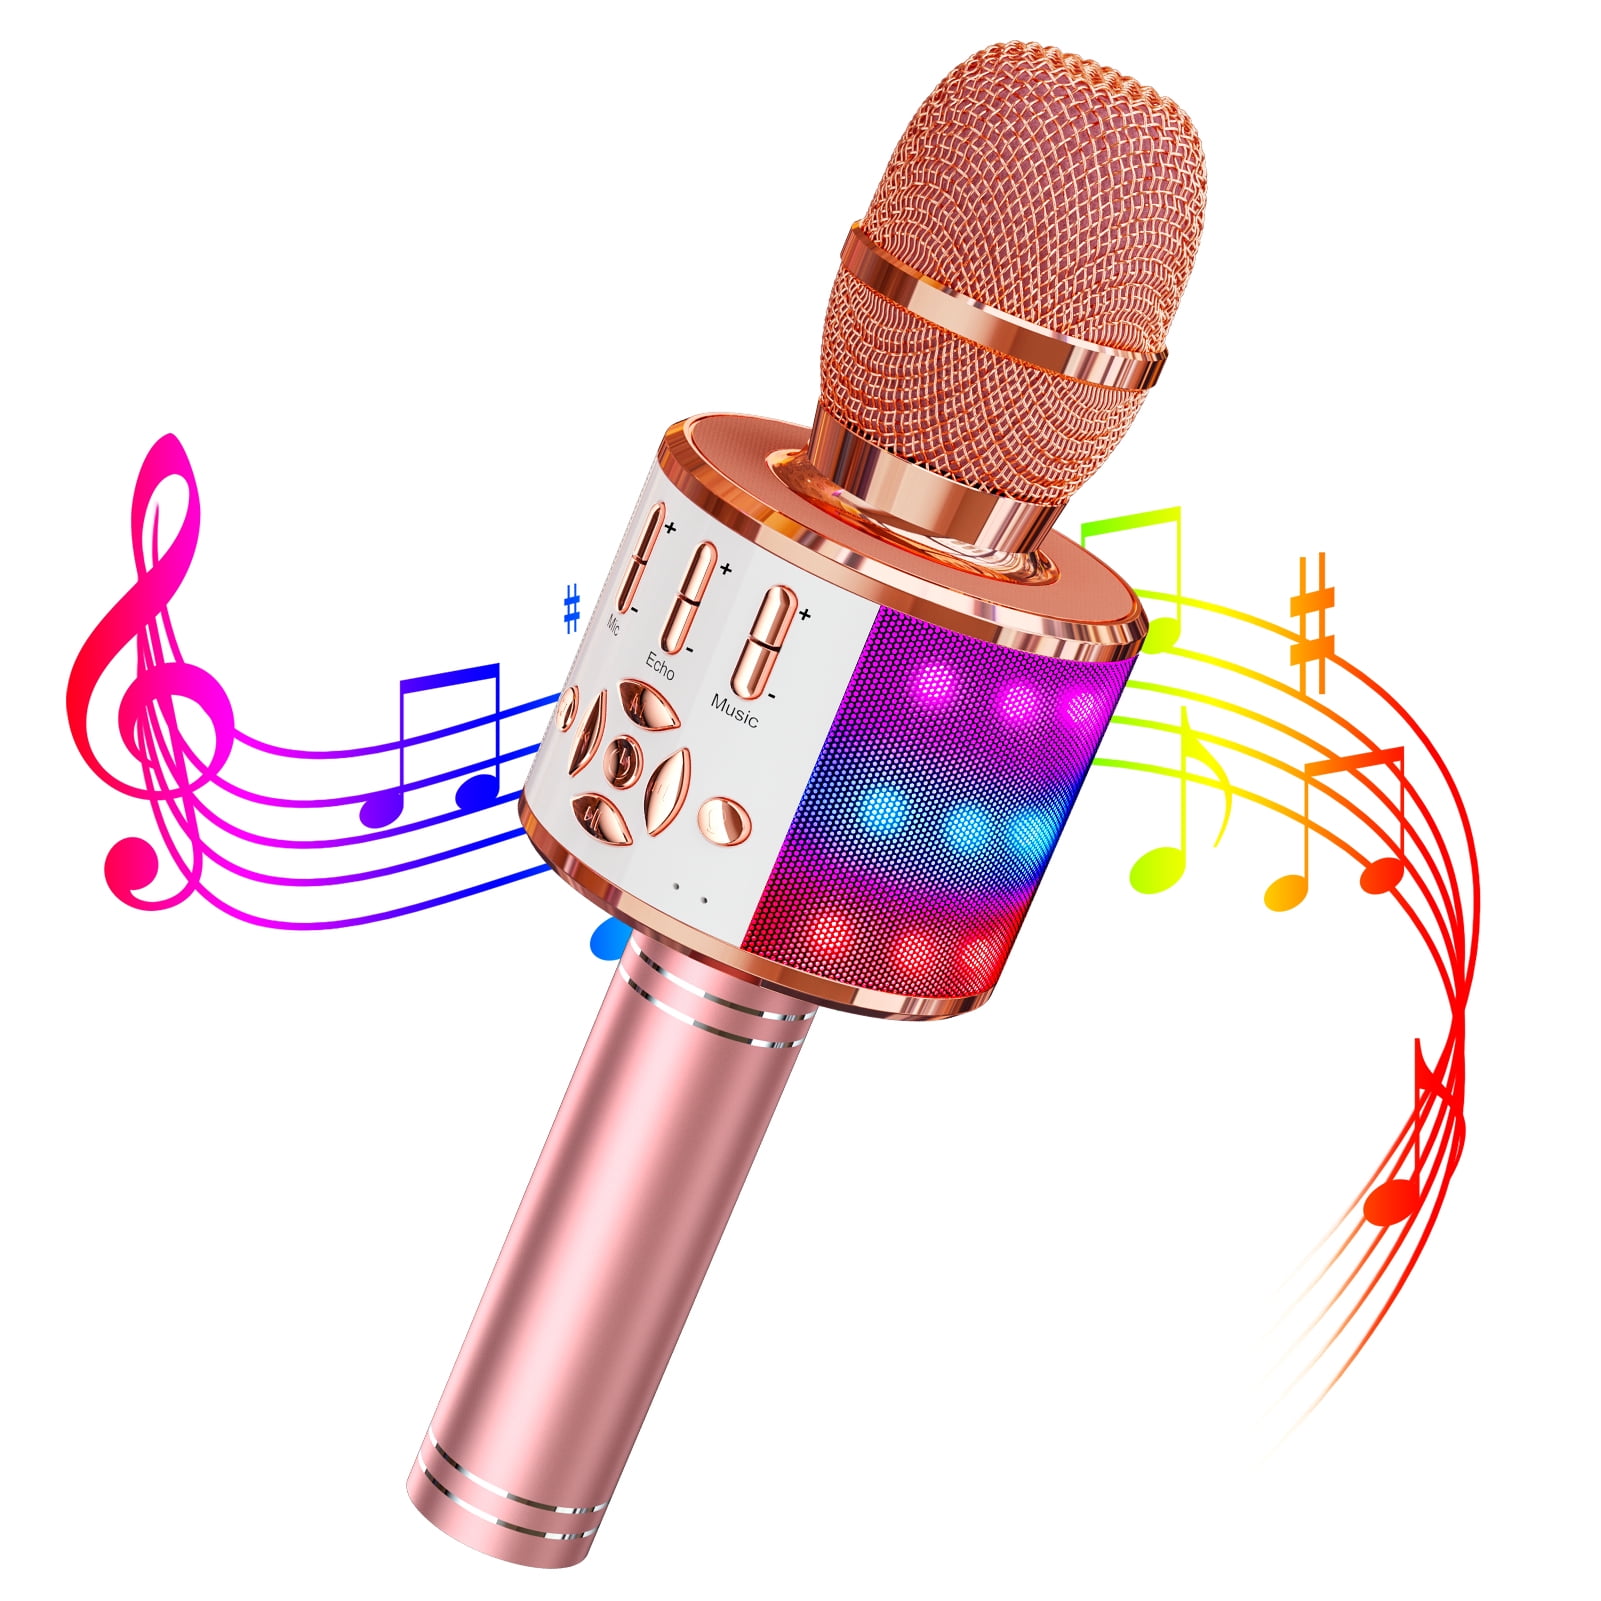 Wireless Bluetooth Handheld Karaoke Microphone KTV Speaker Pink WS858L AM30